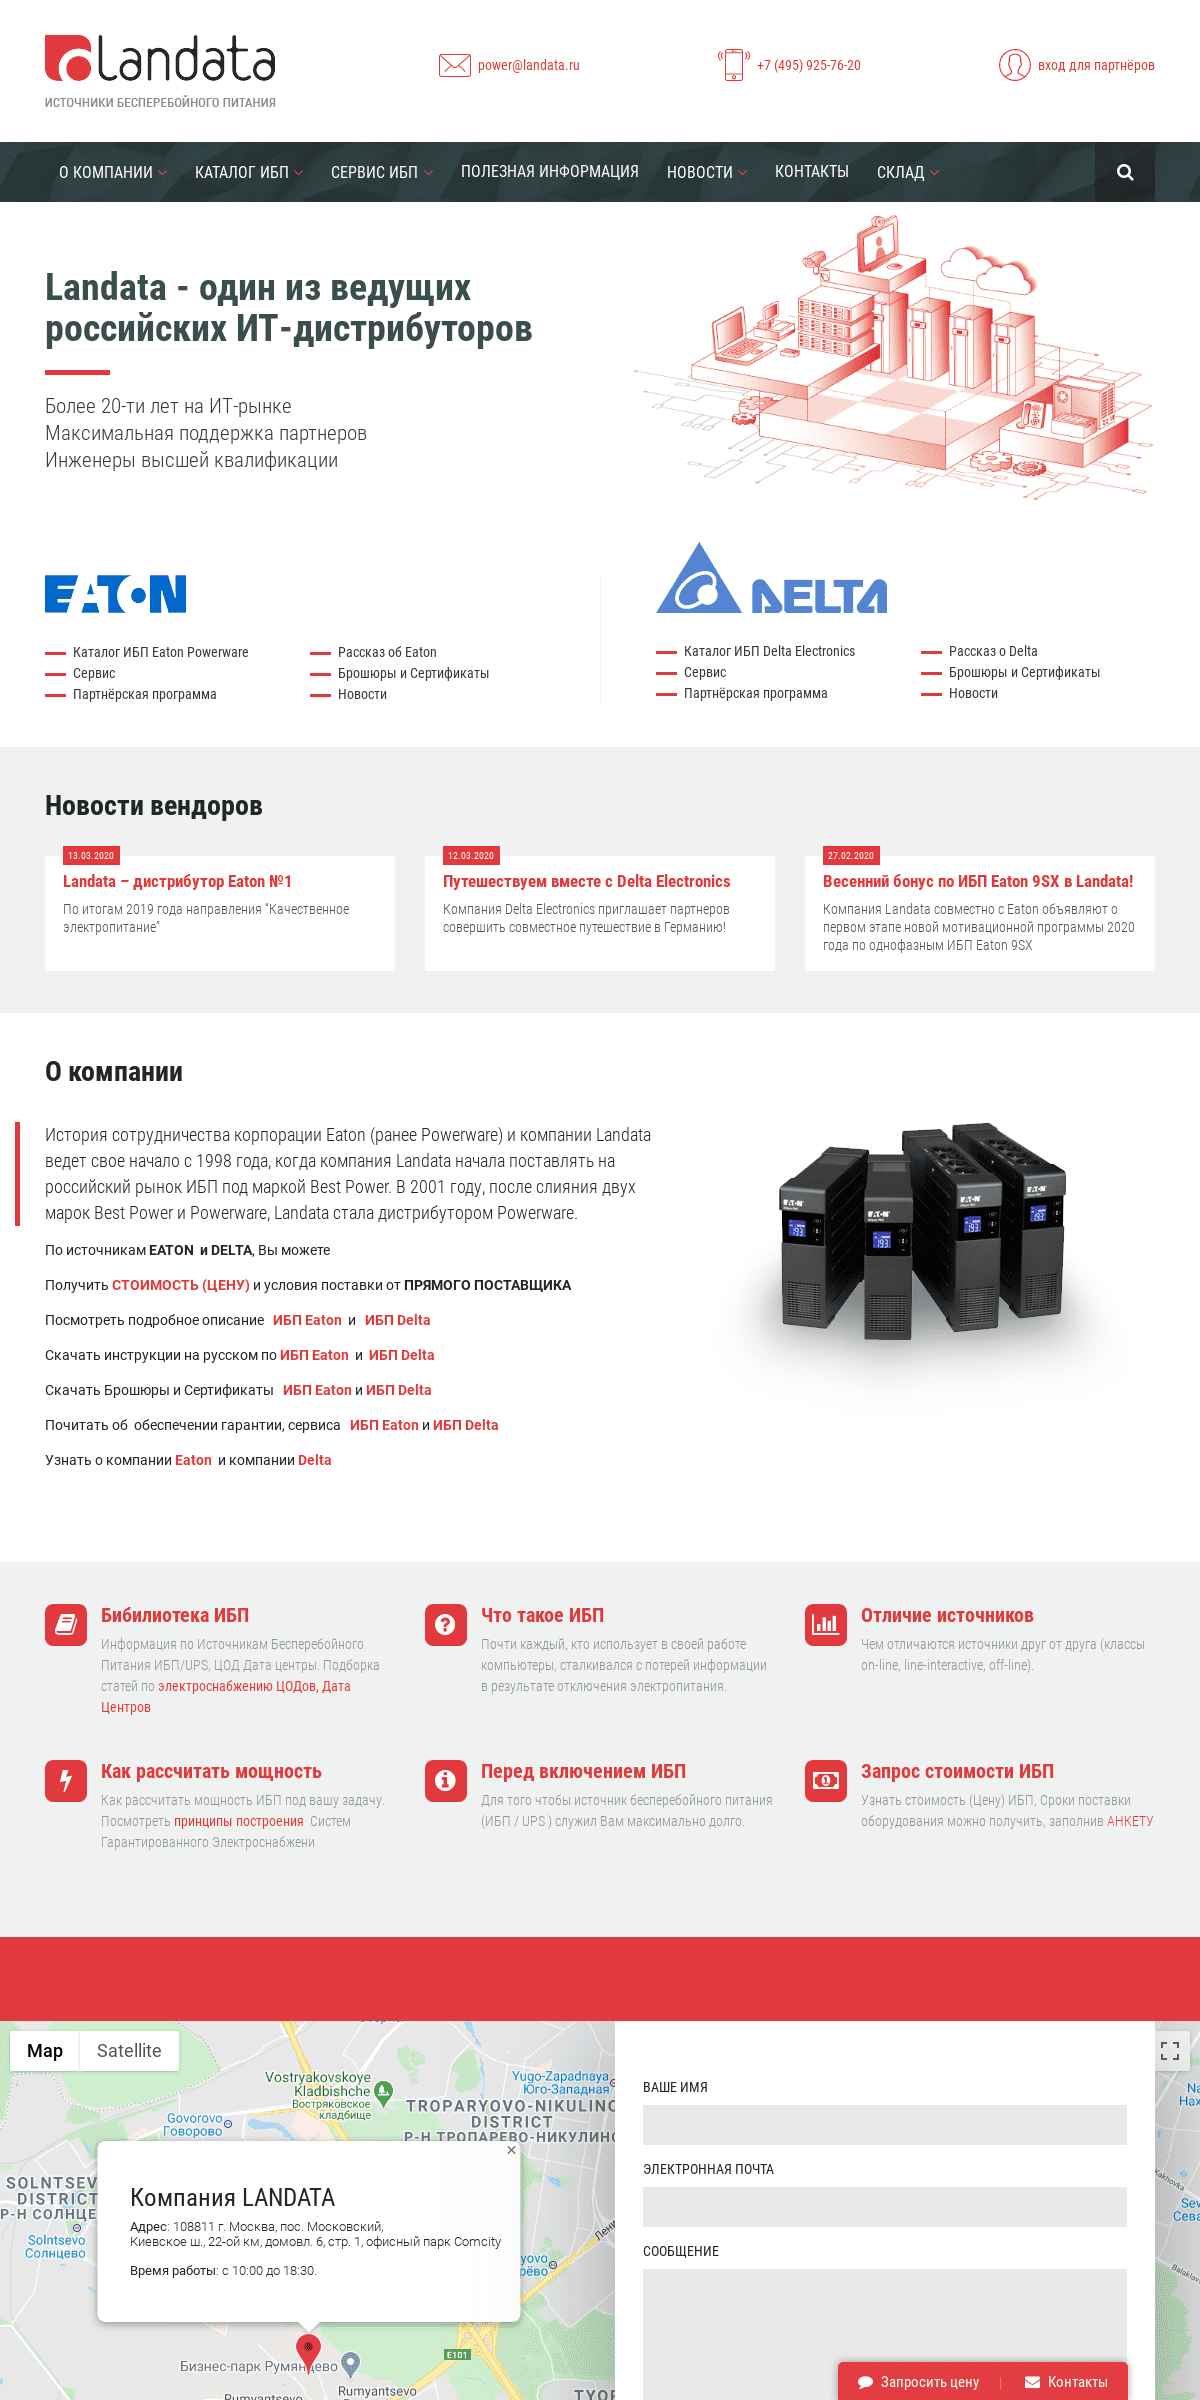 A complete backup of ups-info.ru